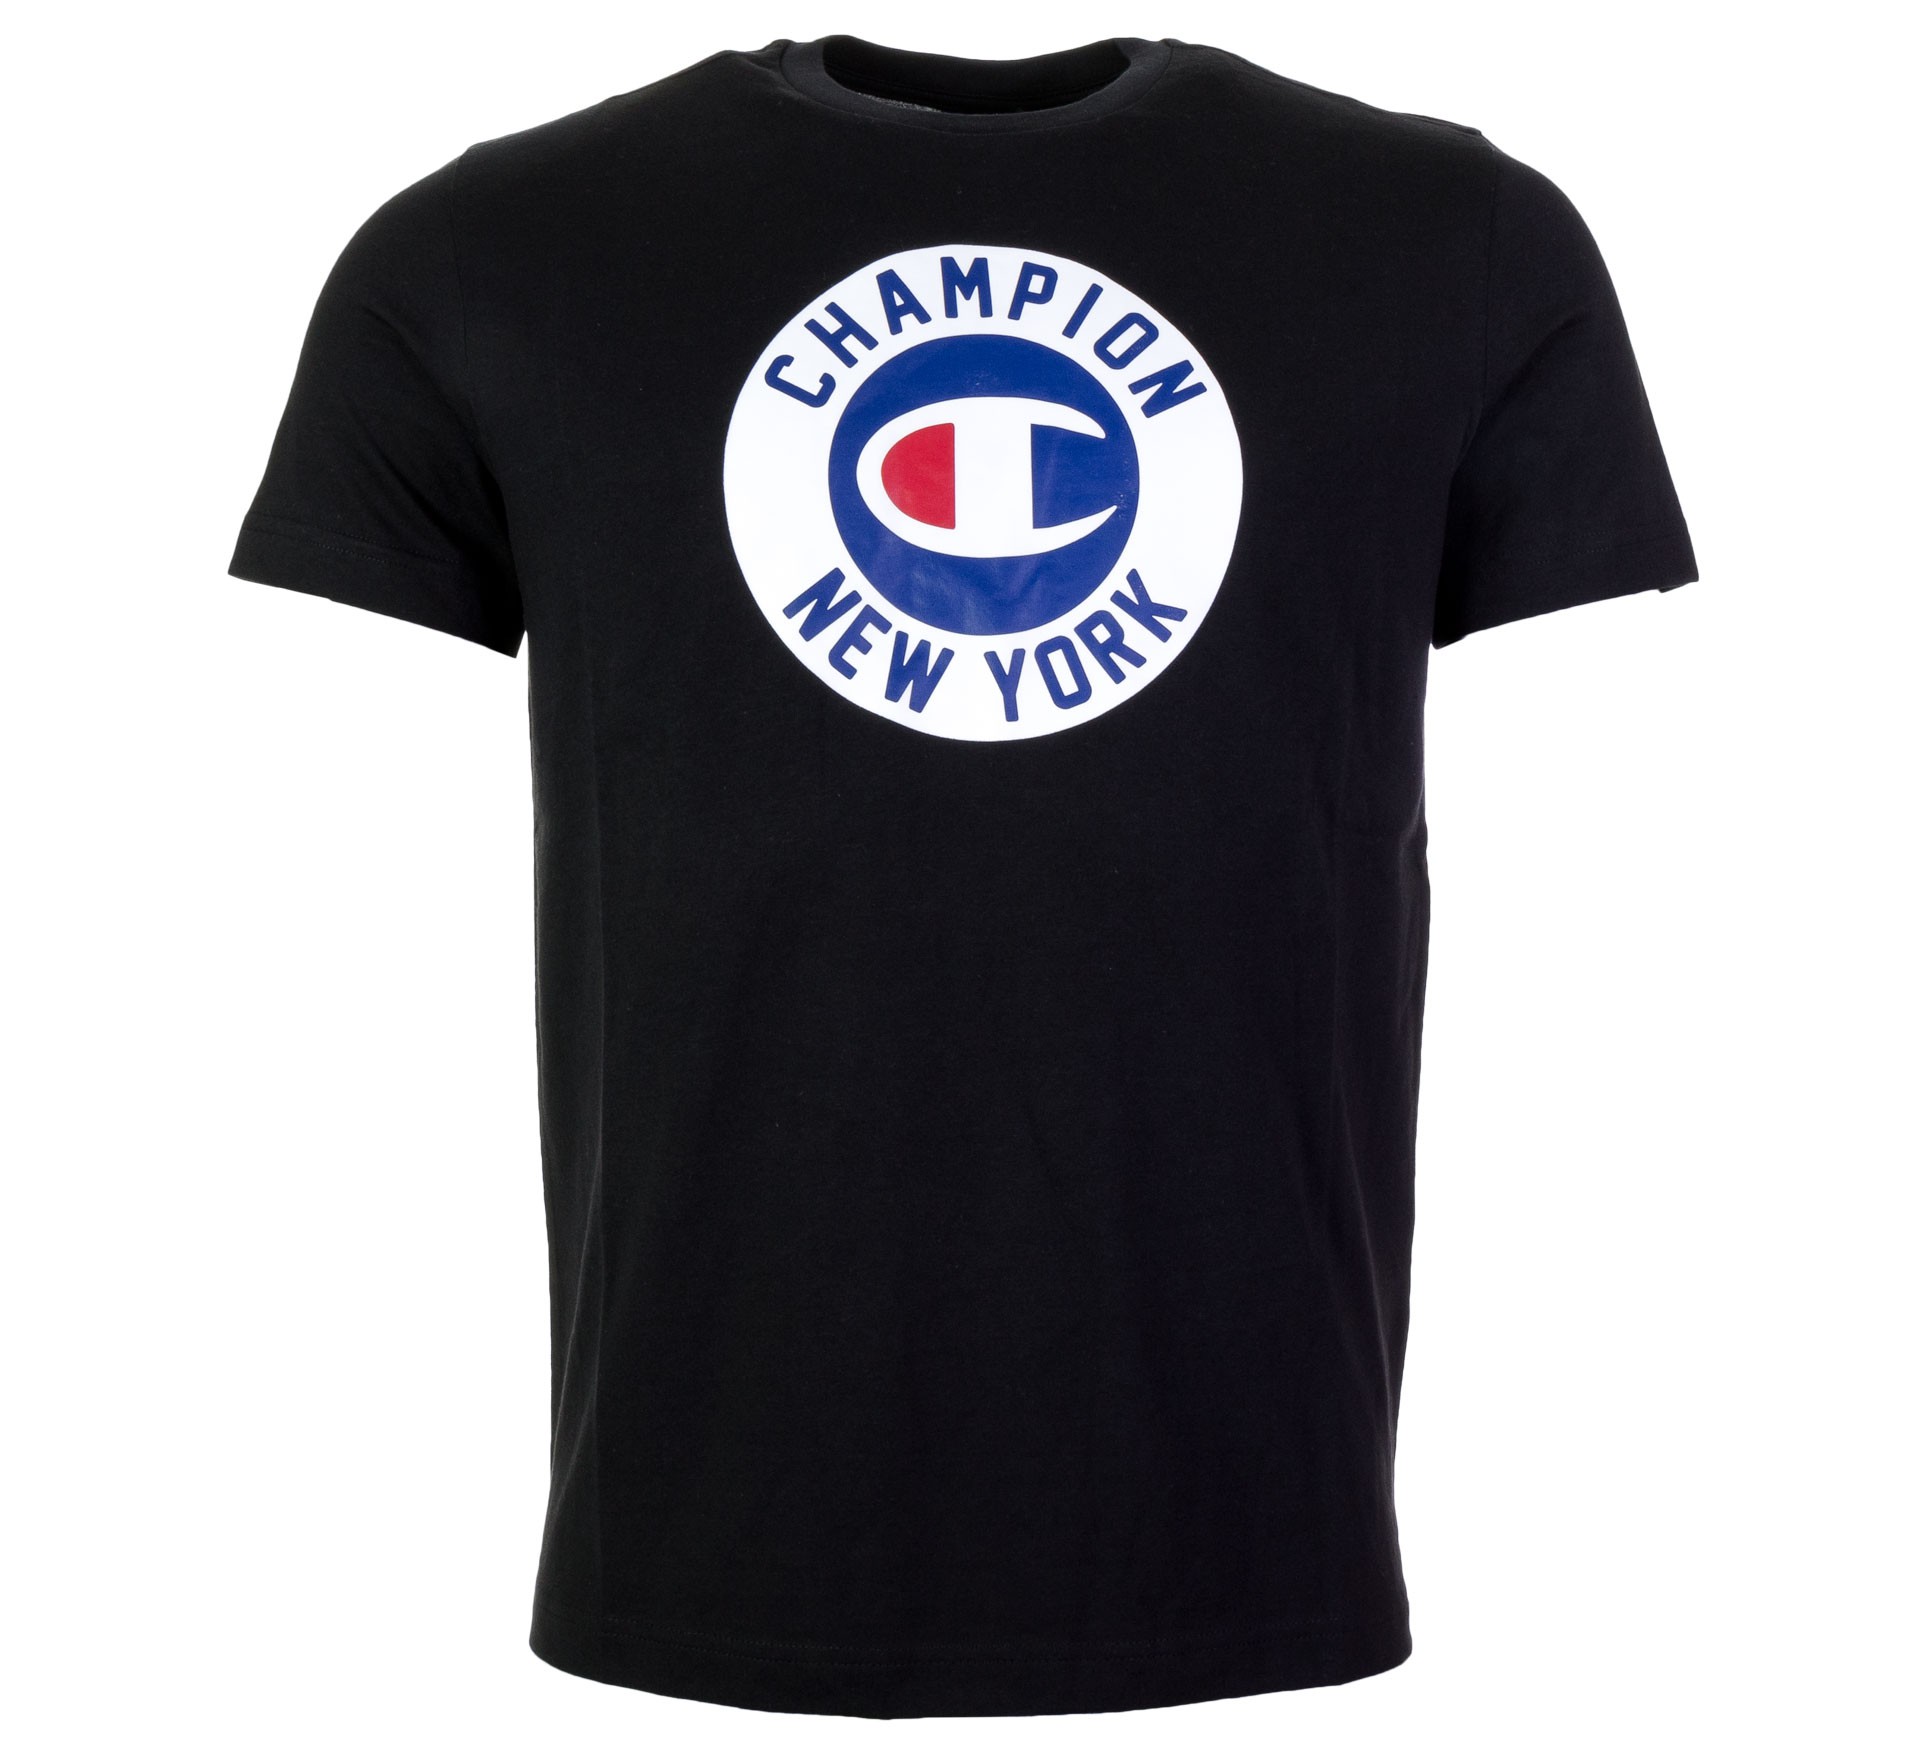 Plutosport - Champion T-shirt